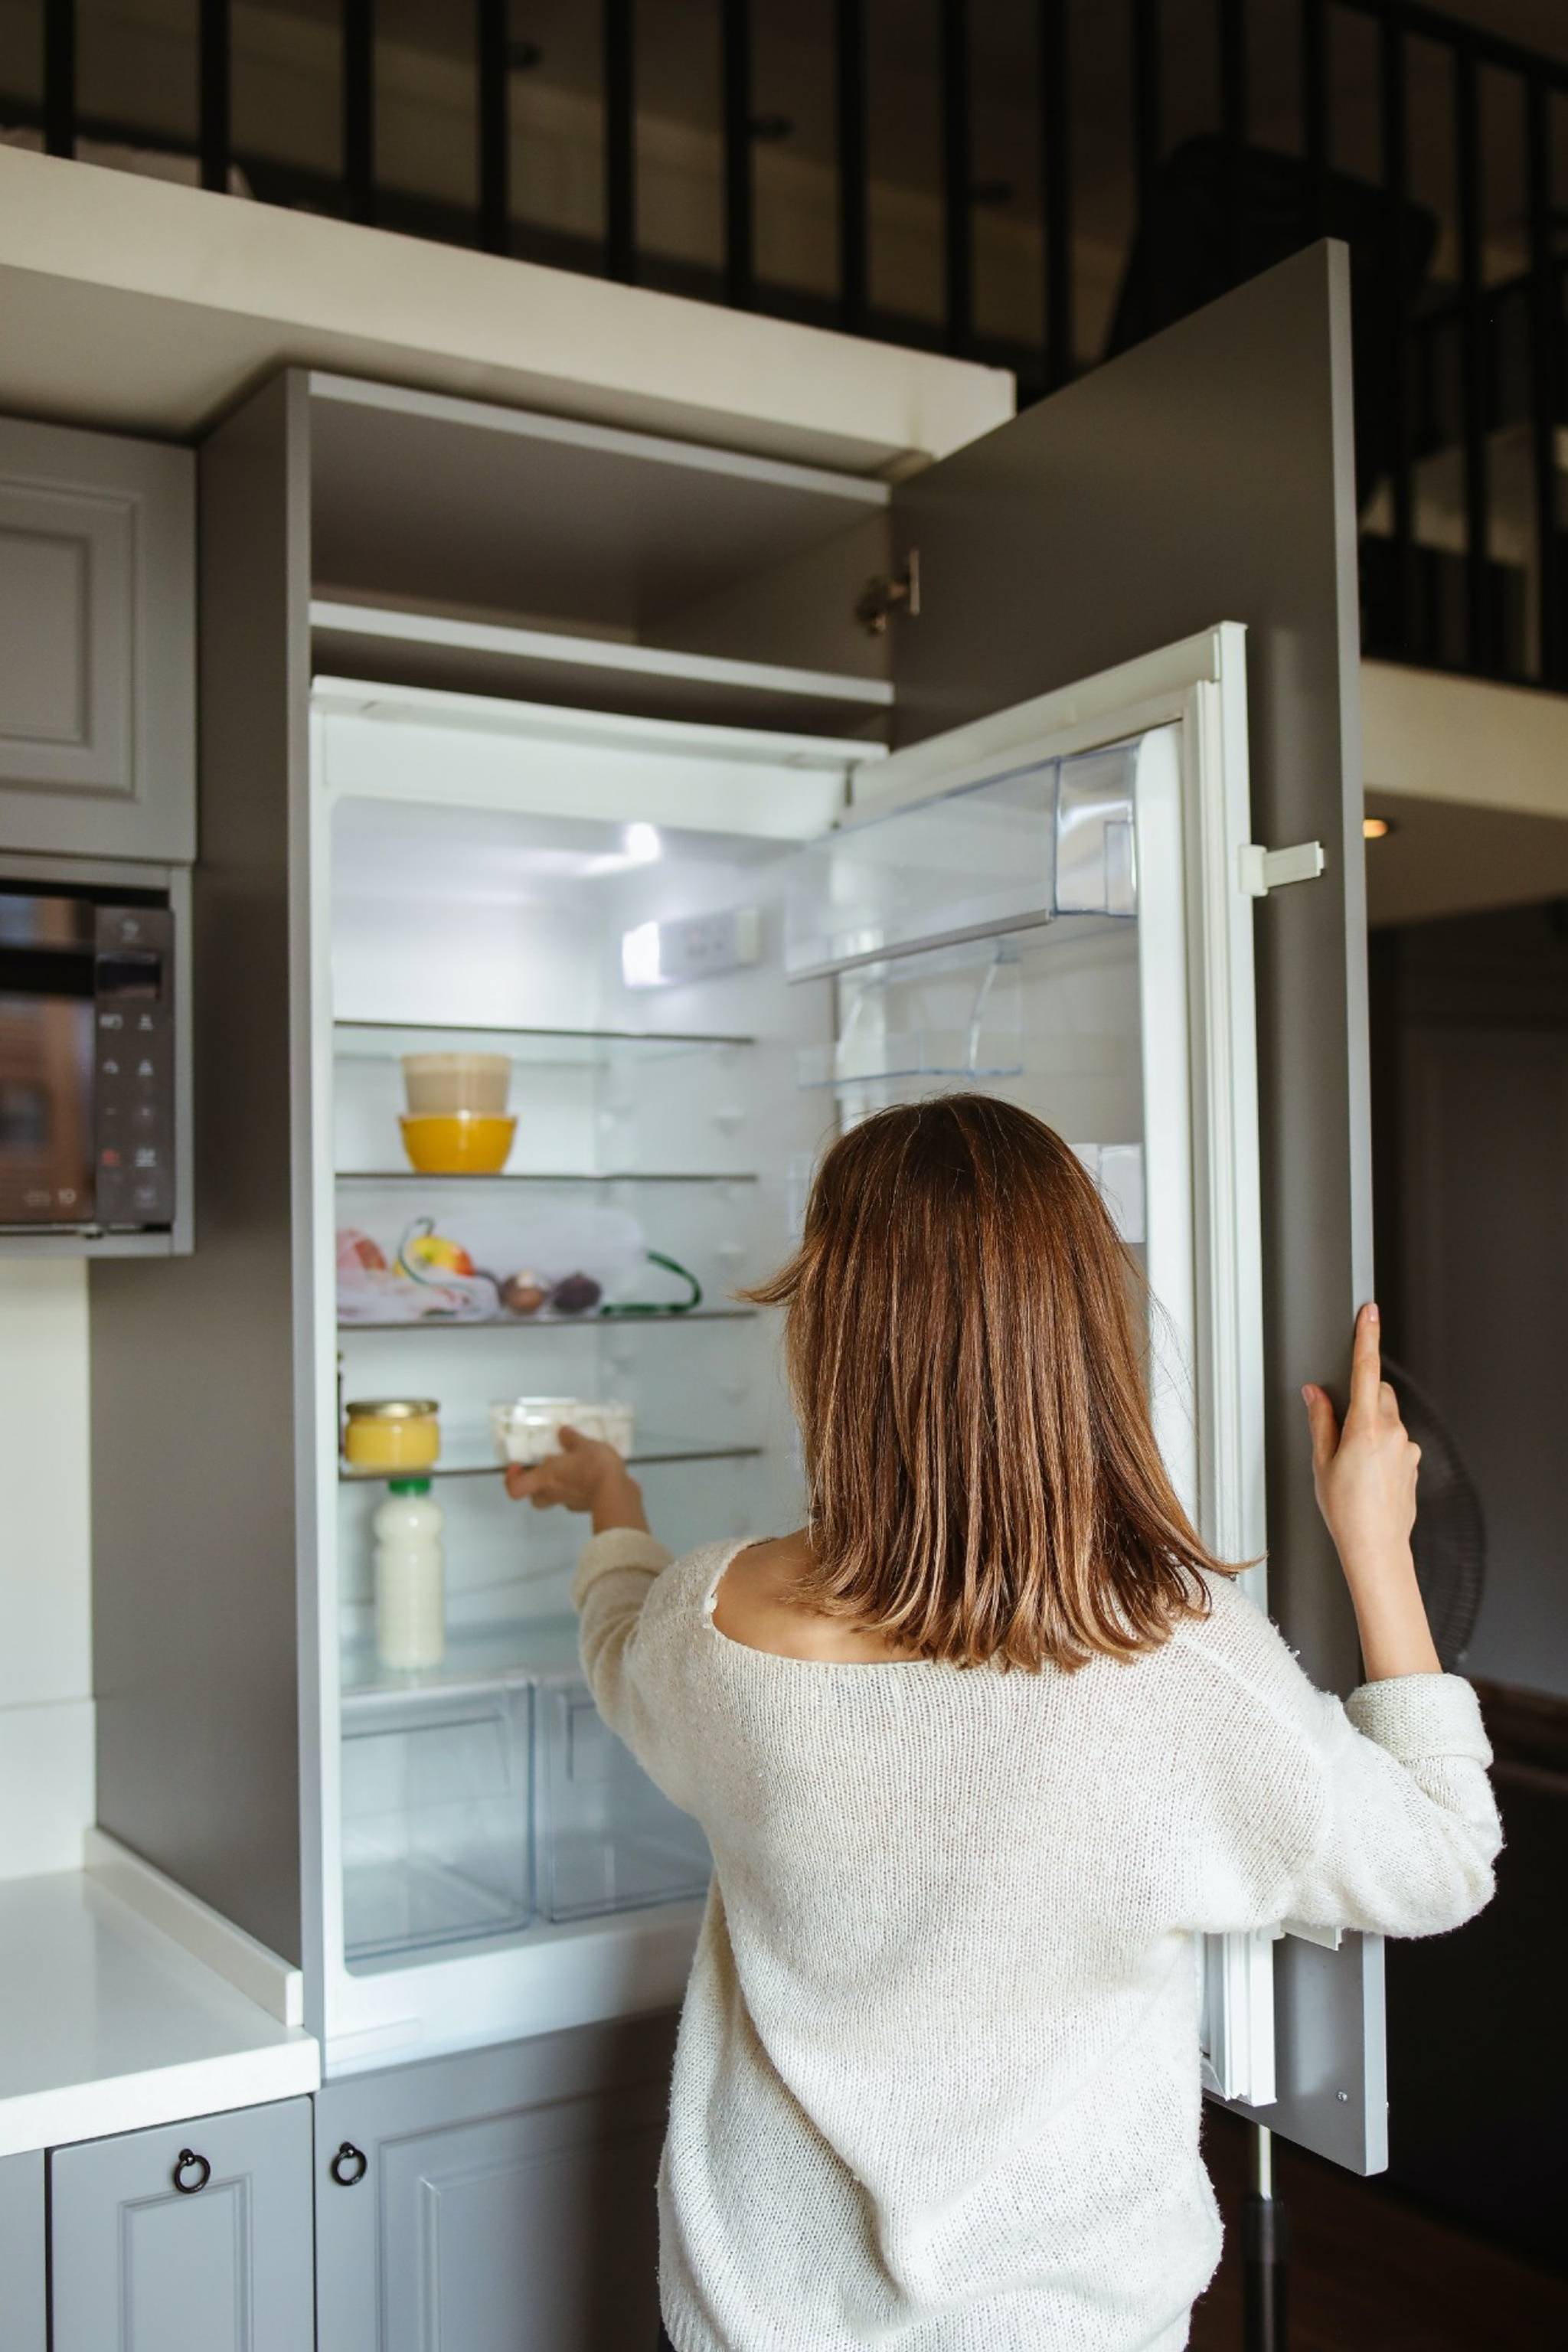 Samsung’s bespoke fridges elevate the kitchen